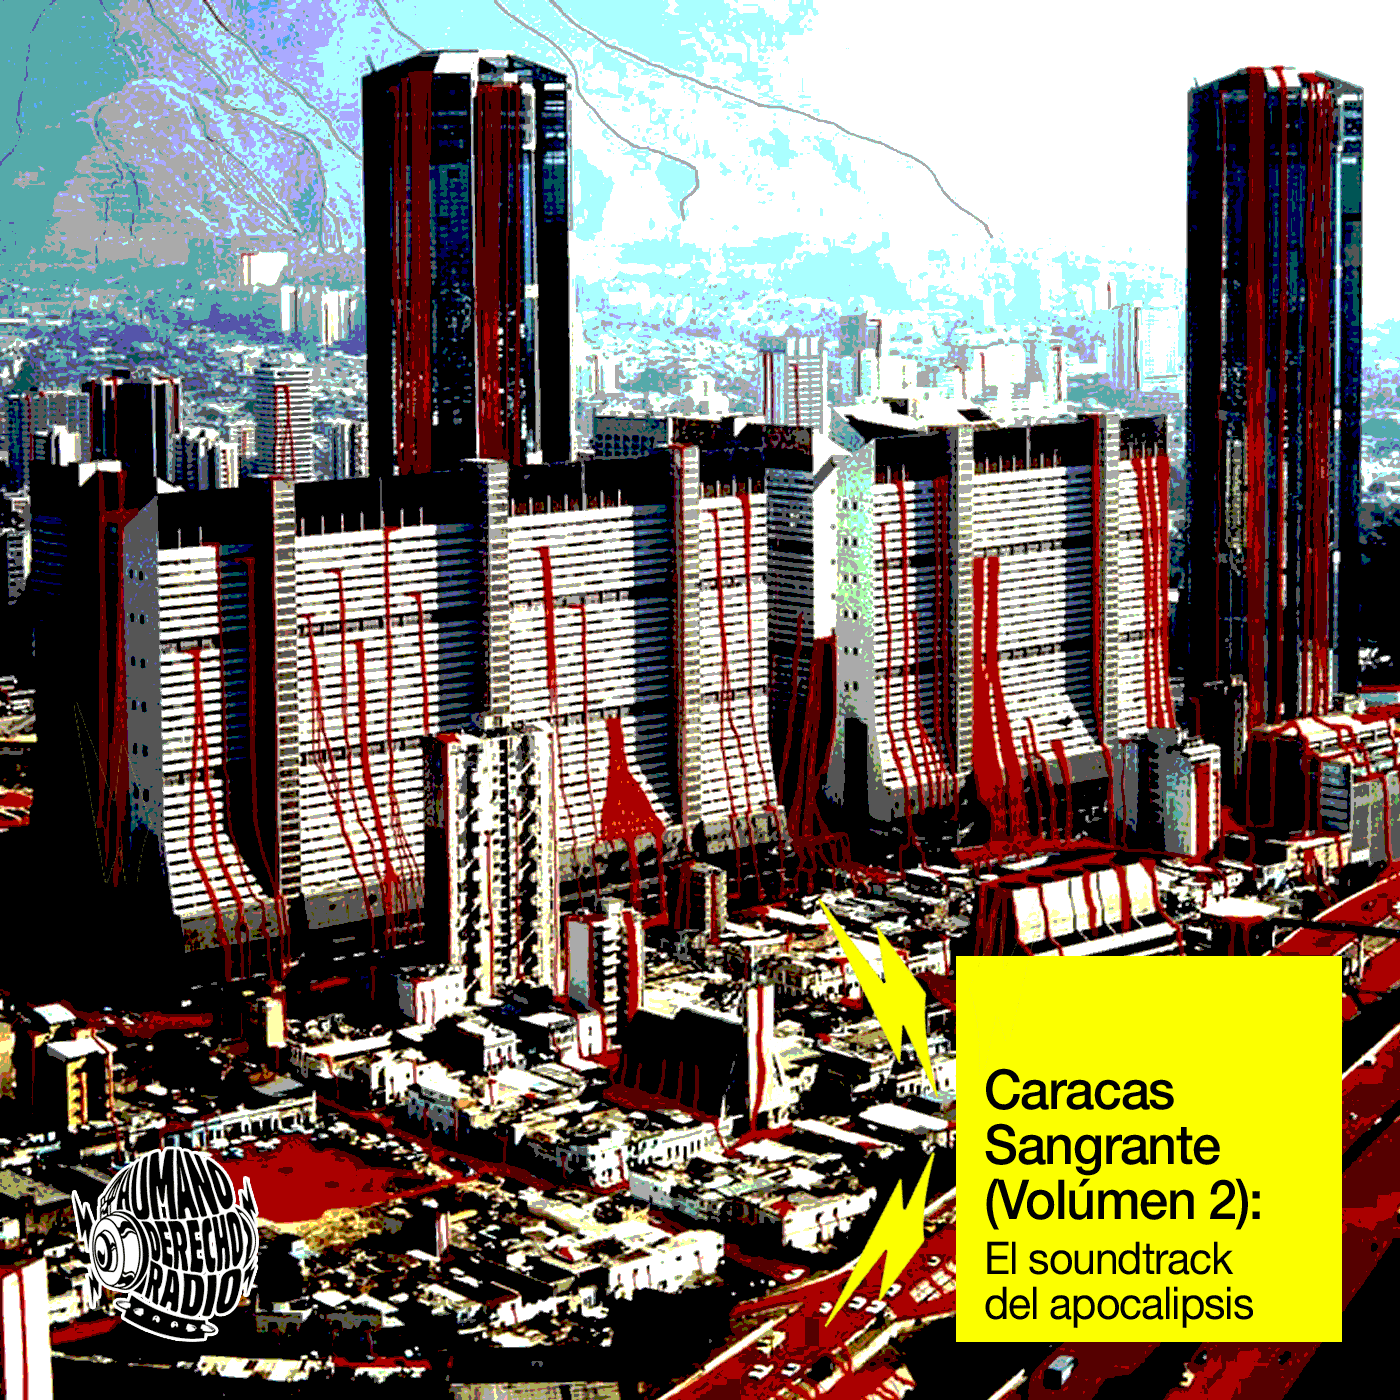 Humano Derecho - Caracas Sangrante